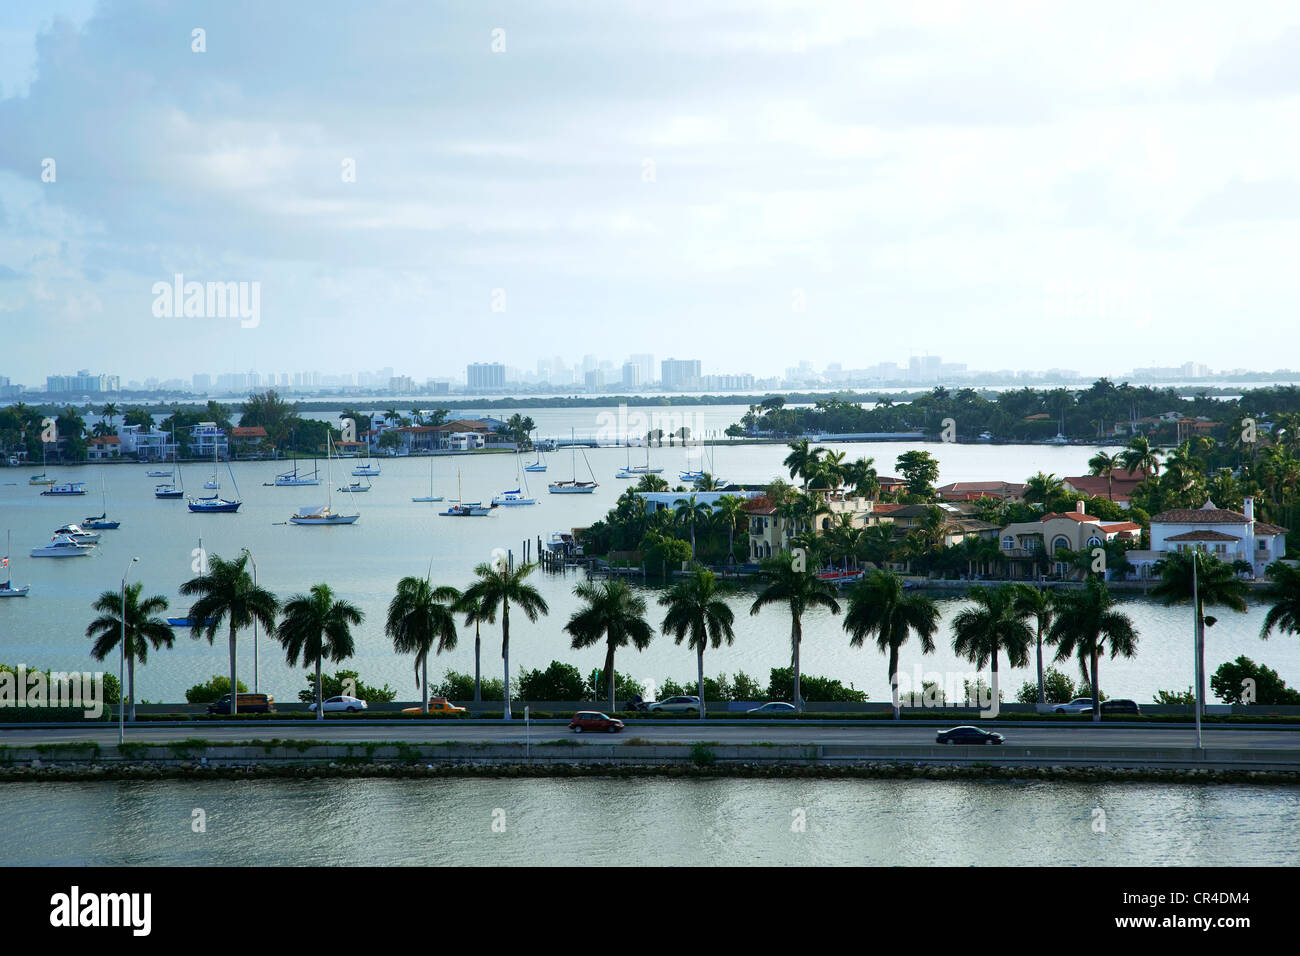 United States, Florida, Miami, Biscayne Bay, Macarthur Causeway Stock Photo